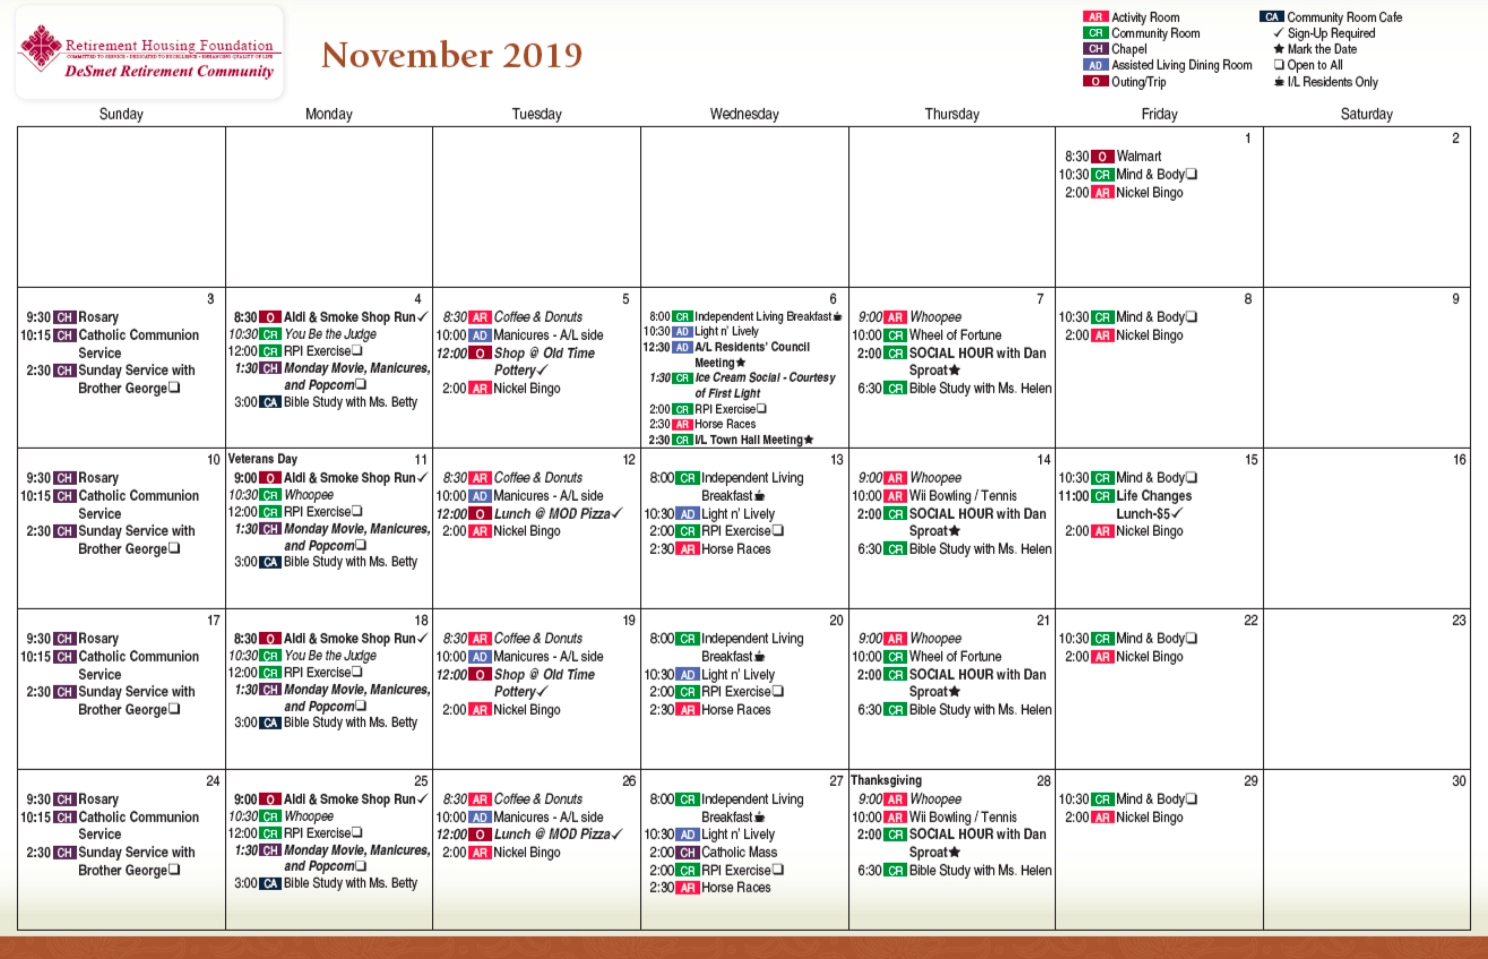 Desmet November 2019 Calendar - Desmet Retirement Community